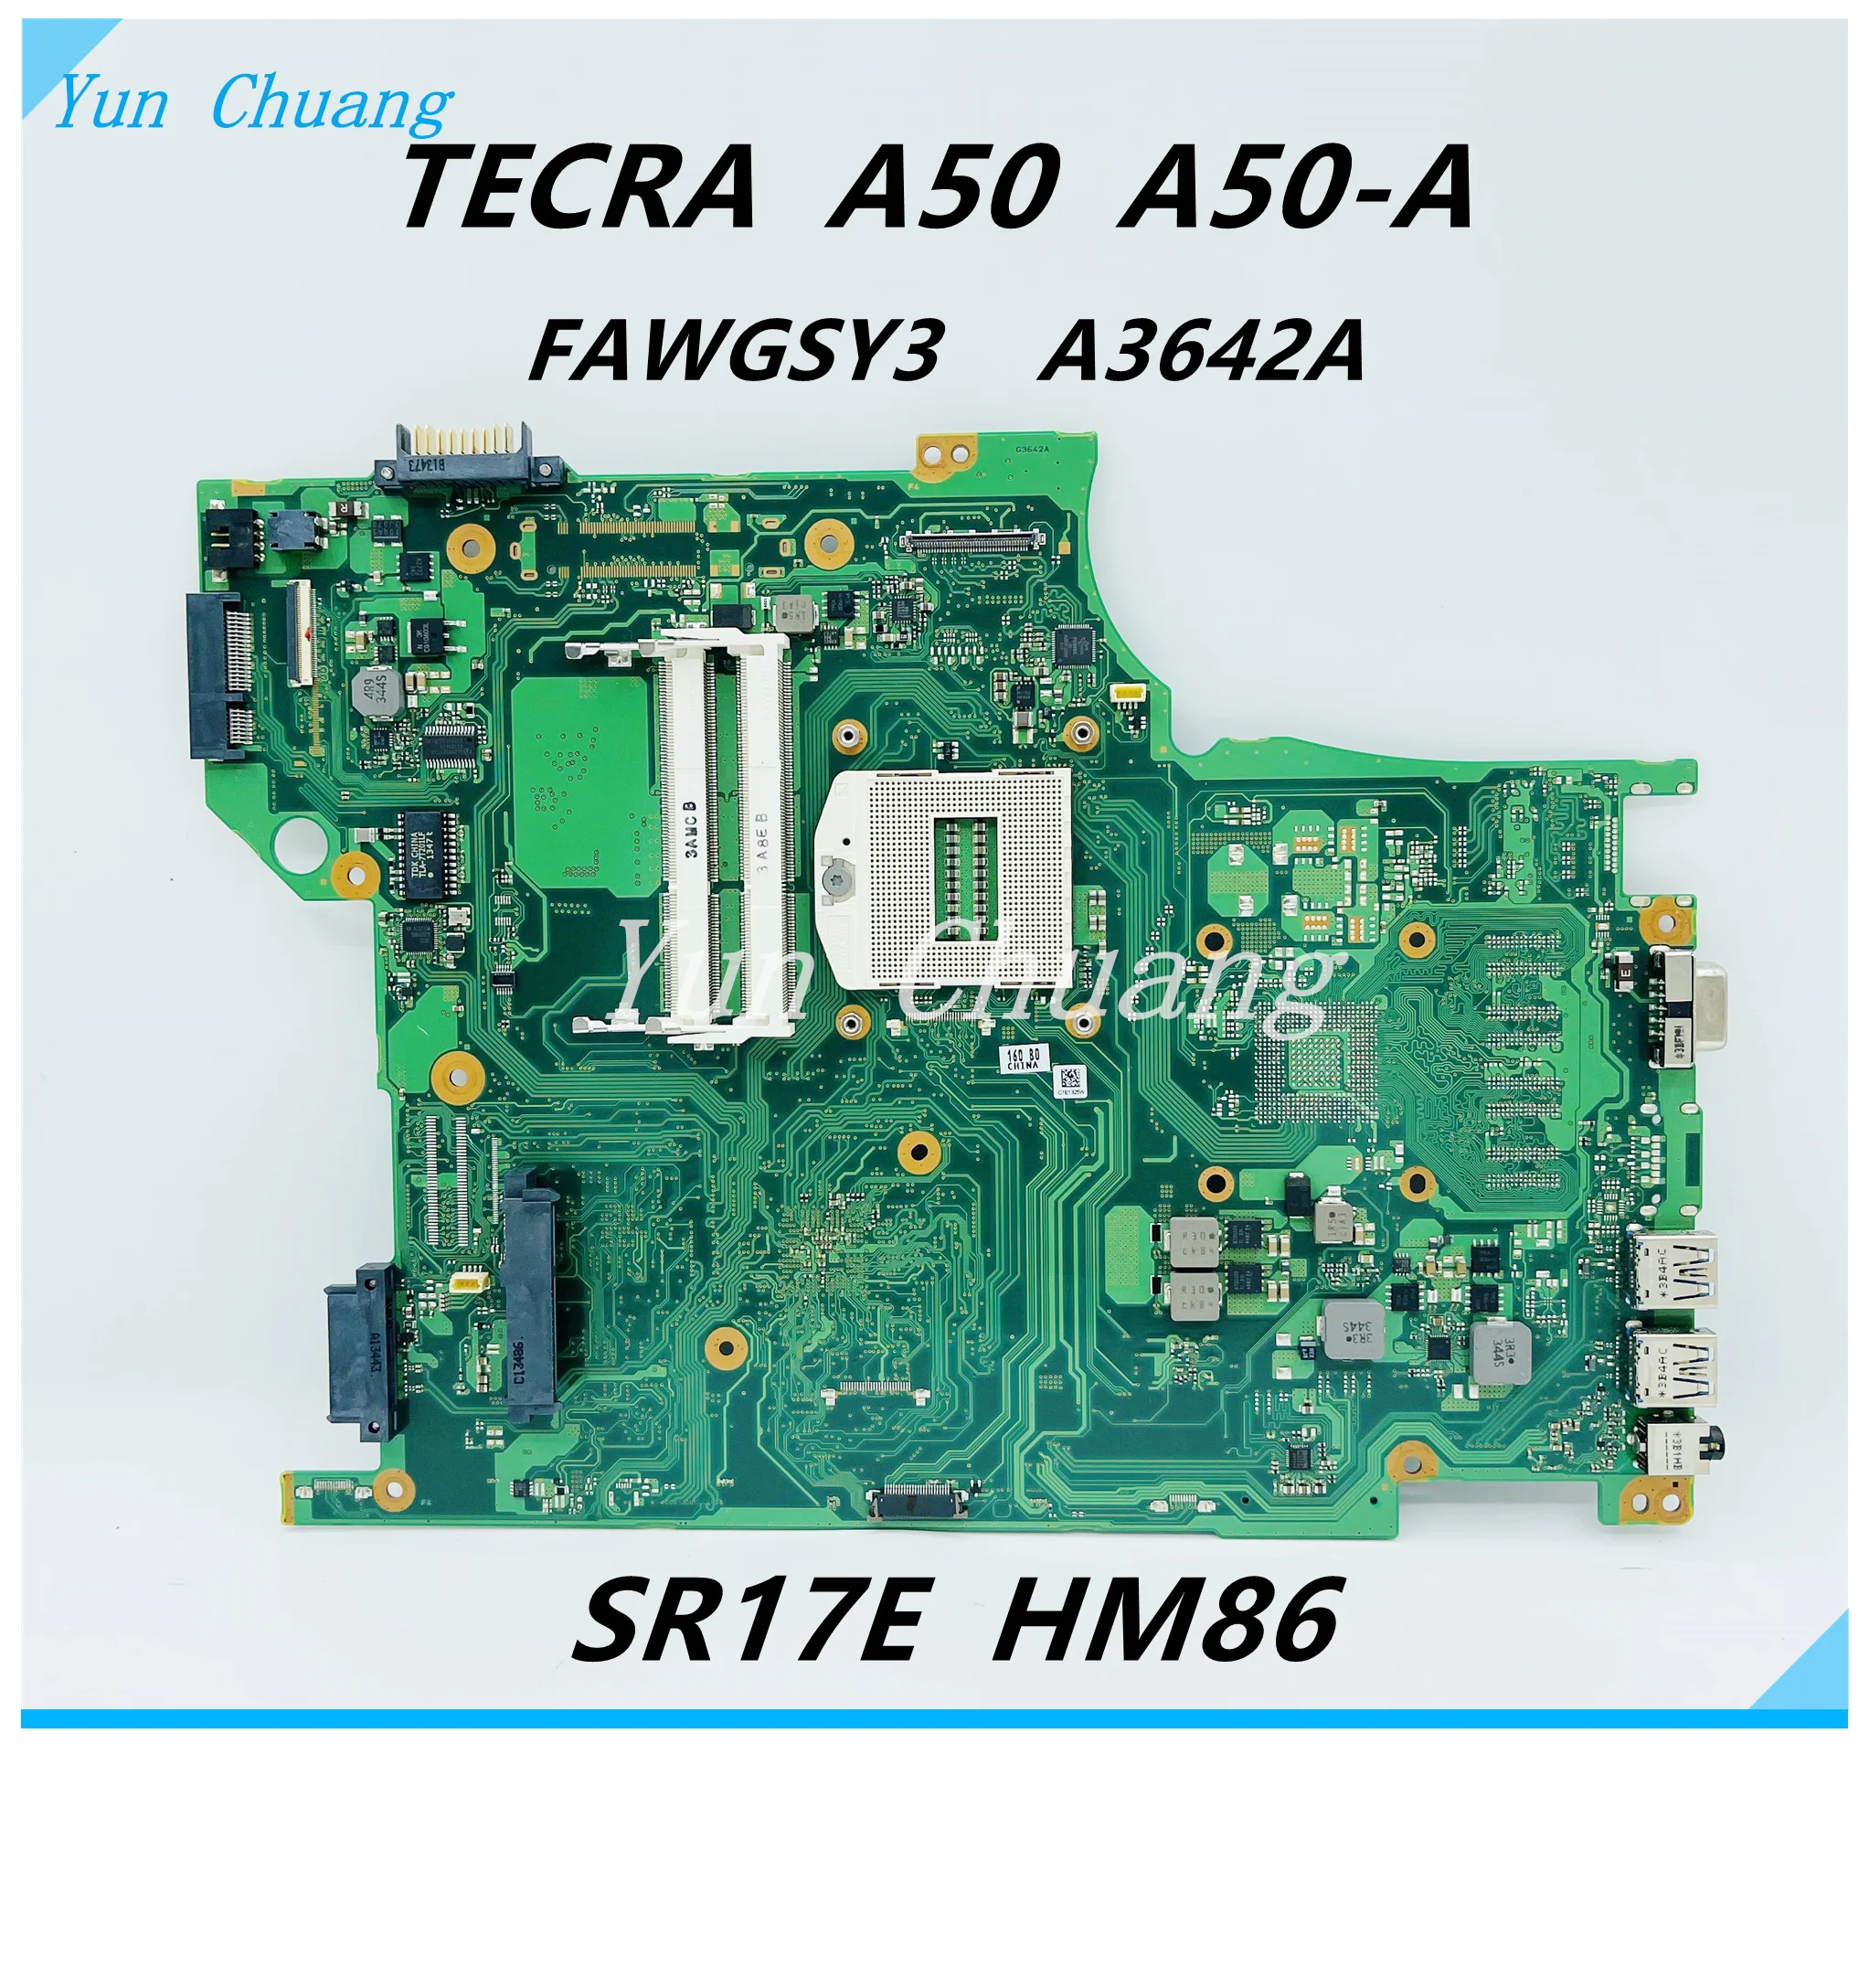 Фото FAWGSY3 A3642A оригинальная материнская плата для ноутбука Toshiba Tecra A50 системная SR17E HM86 UMA